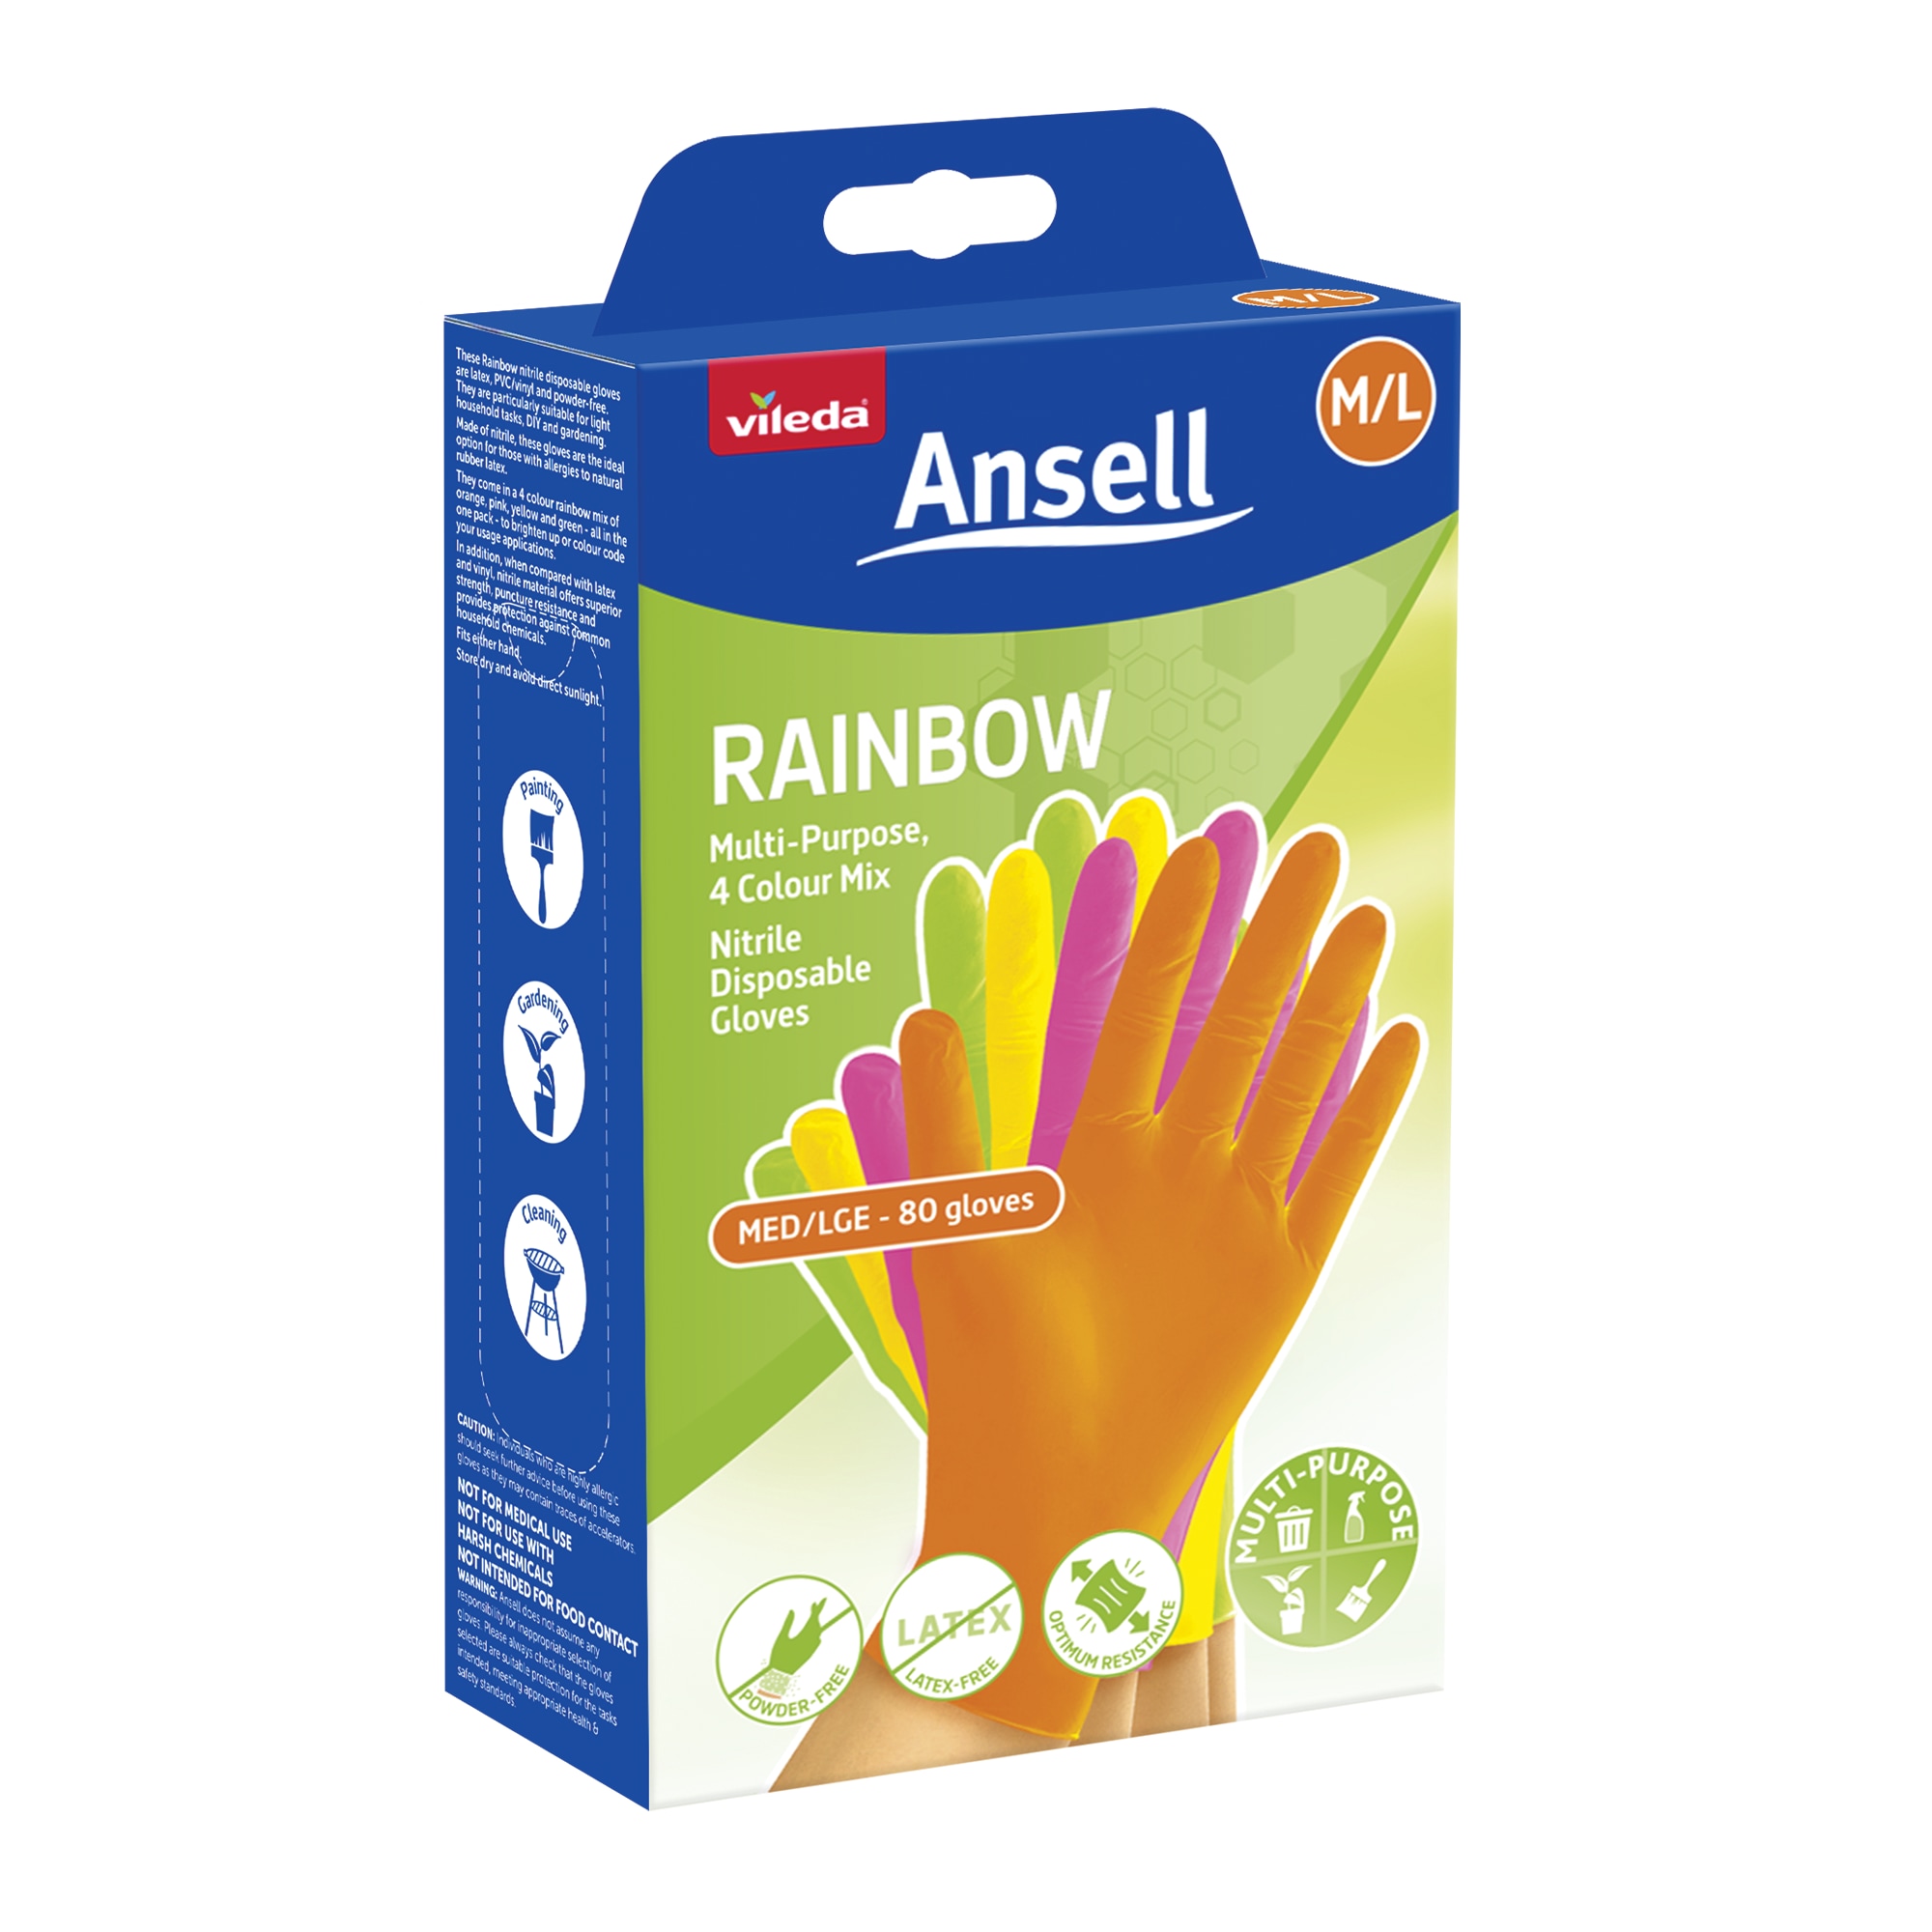 Vileda Ansell Rainbow Nitrile Gloves 80-Pack - M/L